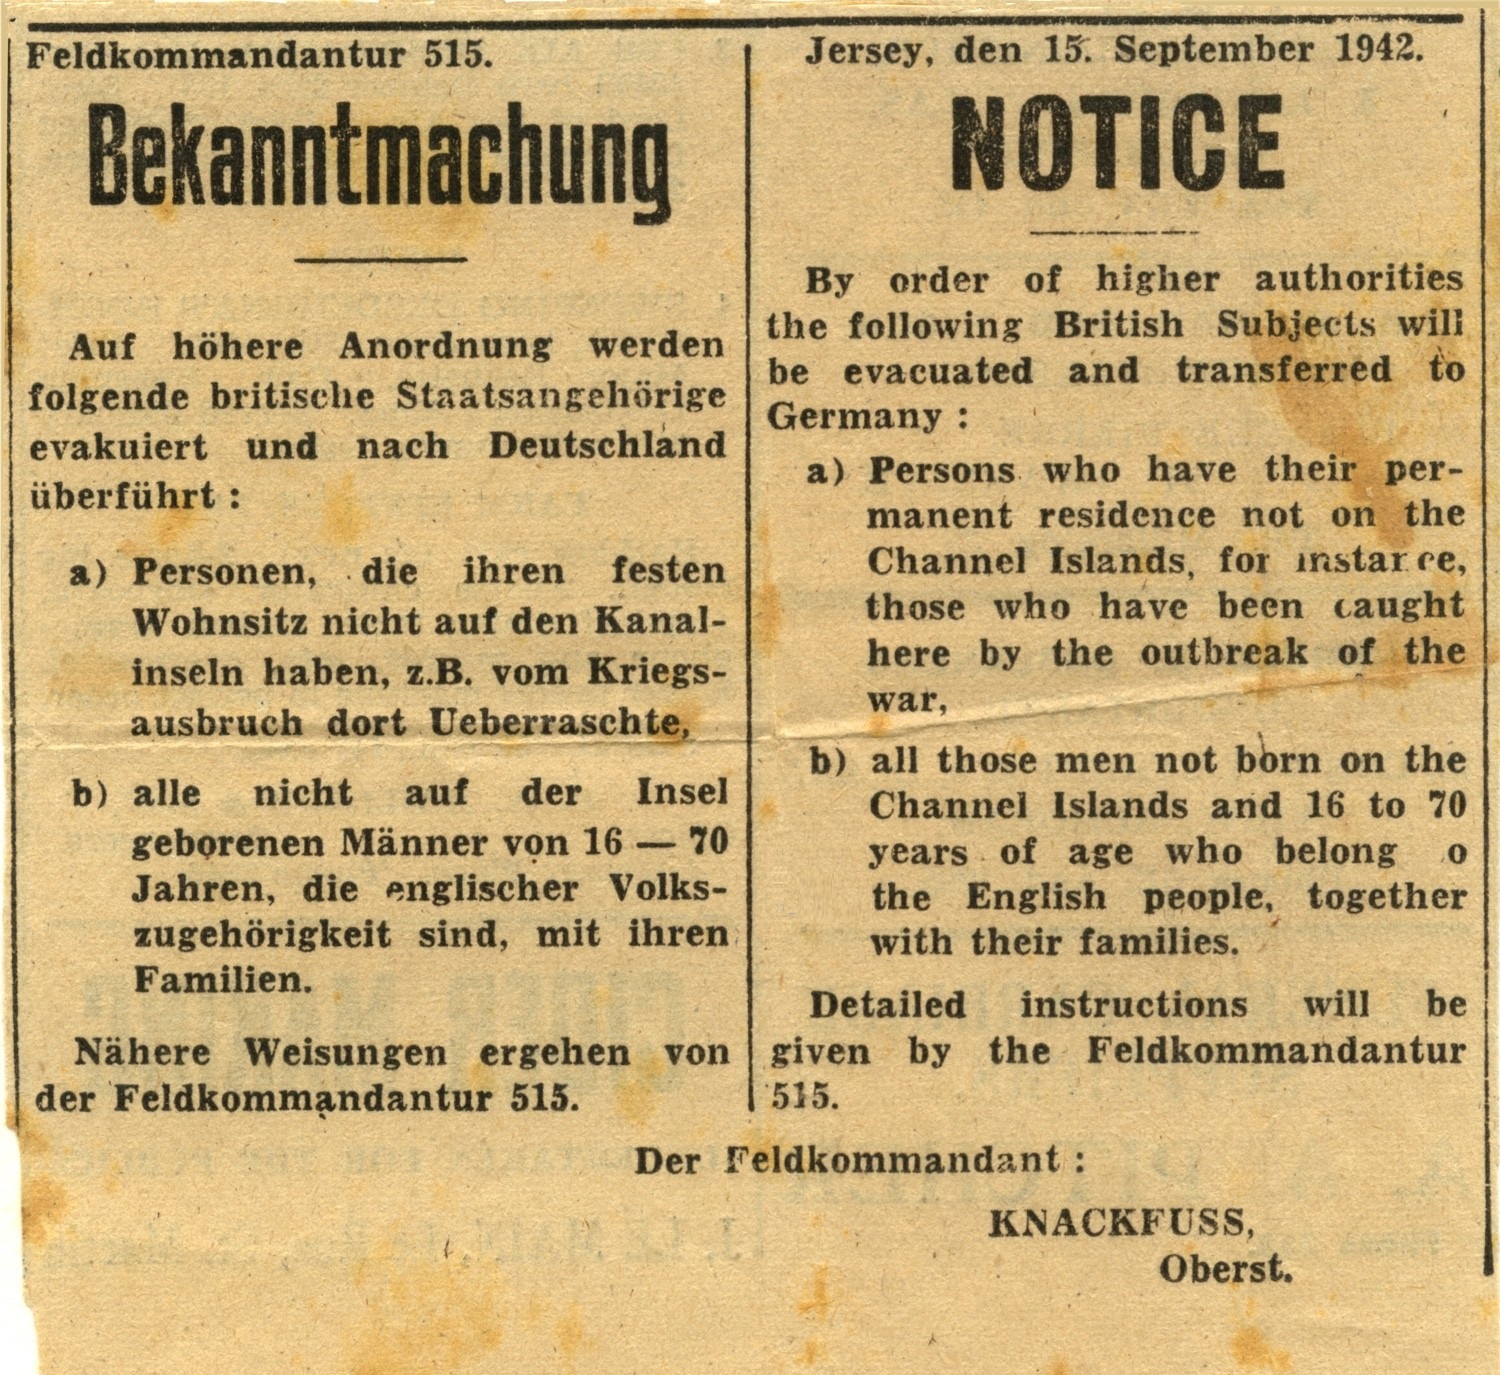 The deportation order of 15 September 1942.